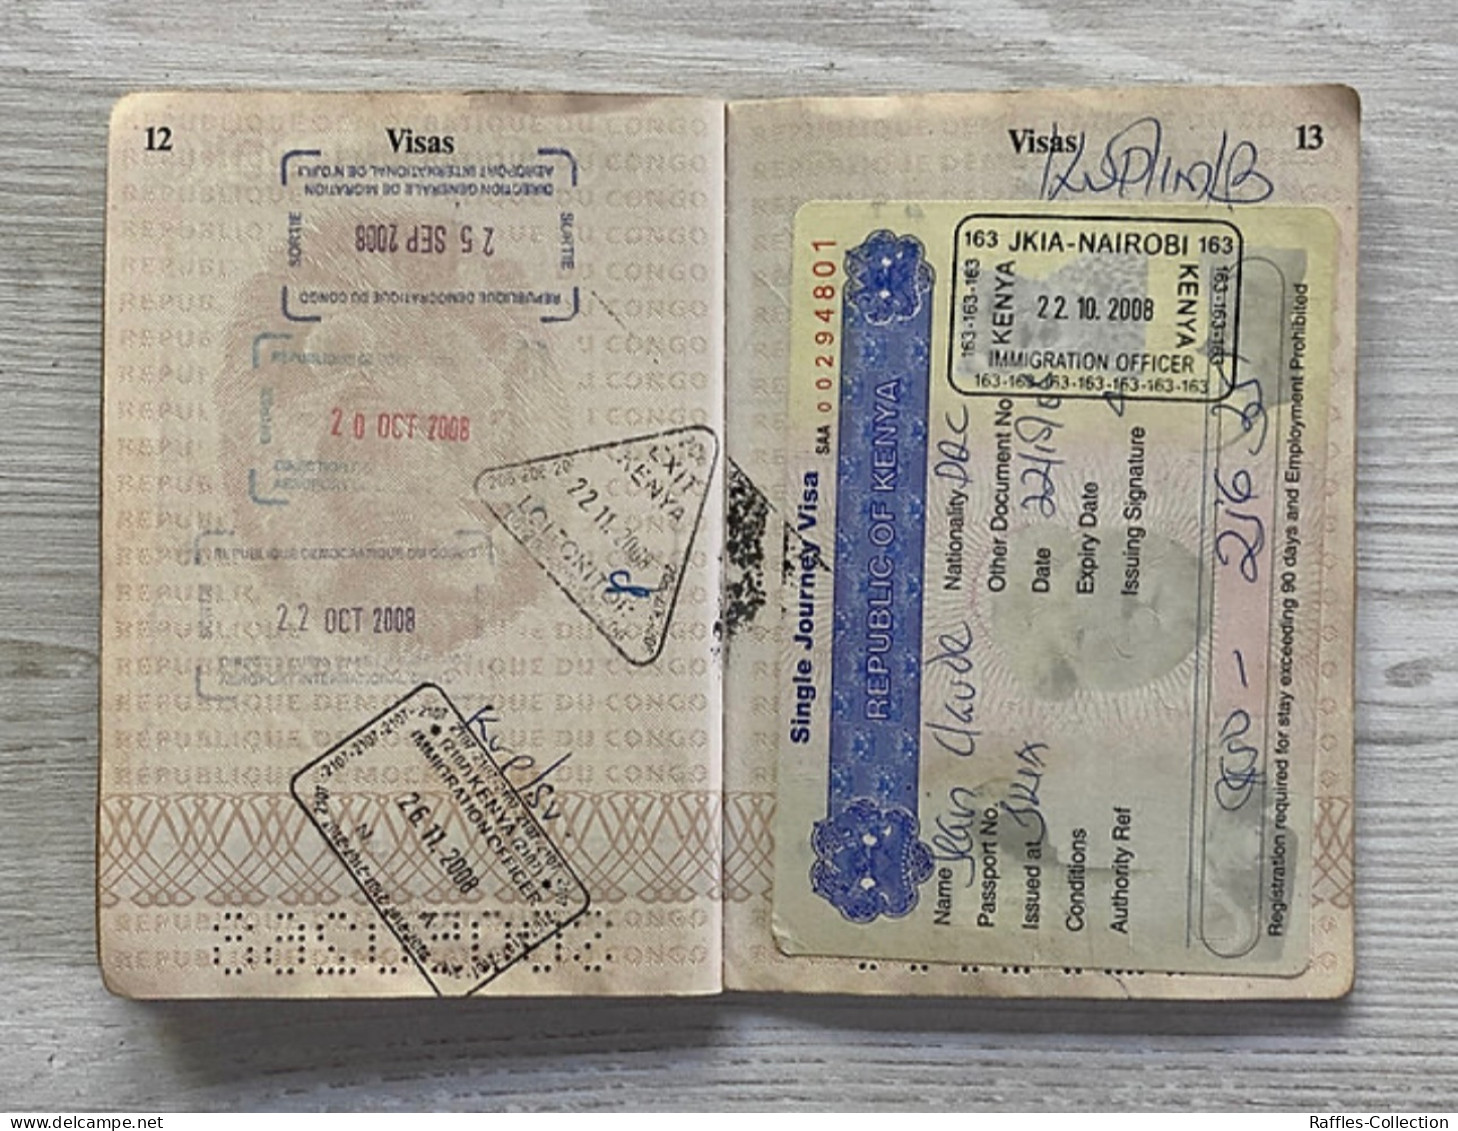 Congo Service passport passeport reisepass pasaporte passaporto